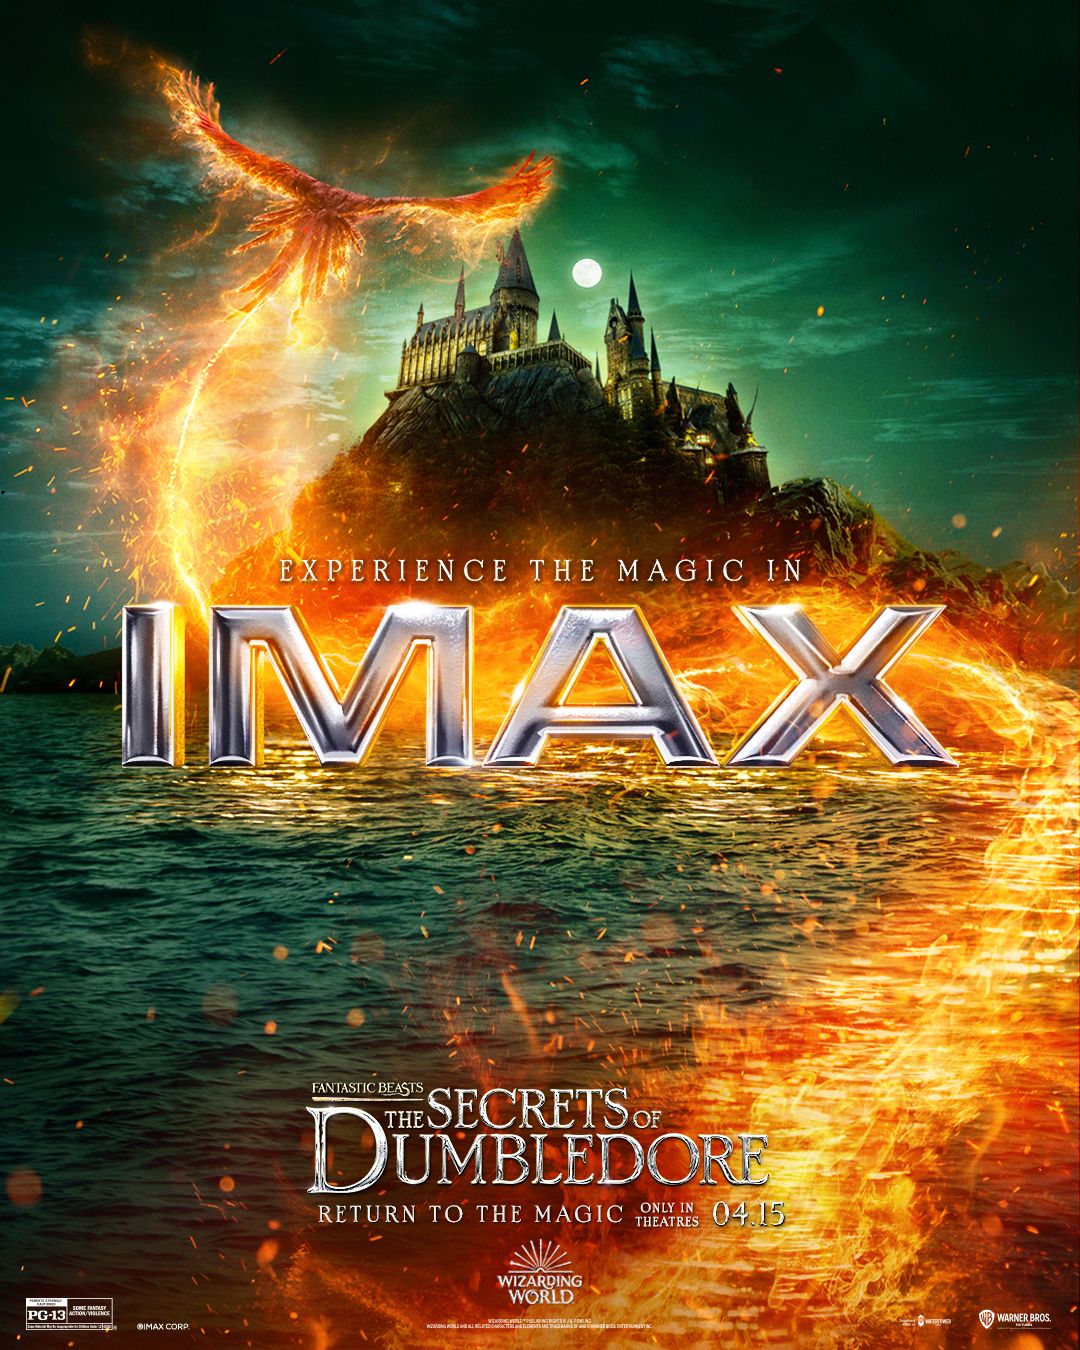 “Fantastic Beasts: The Secrets of Dumbledore”: IMAX poster